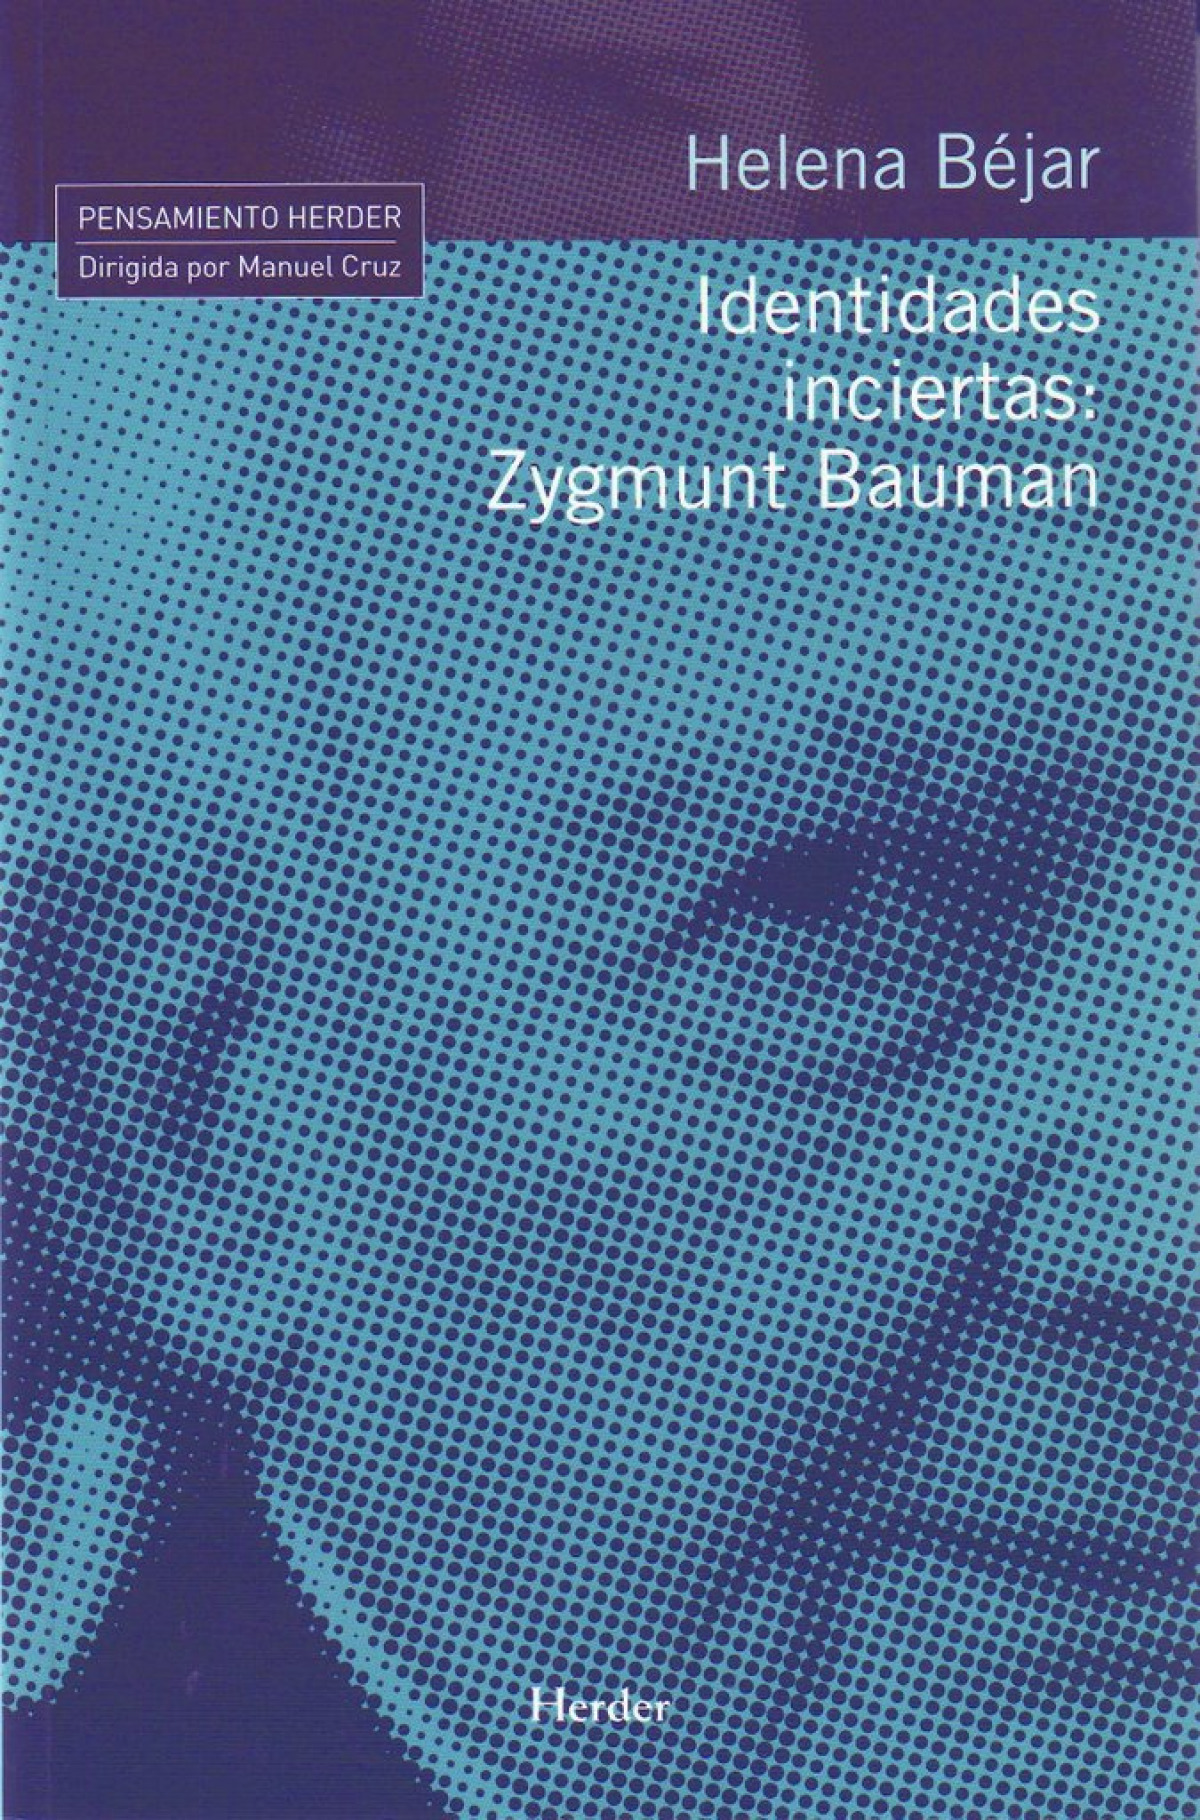 Identidades inciertas: Zygmunt Bauman - Béjar, Helena